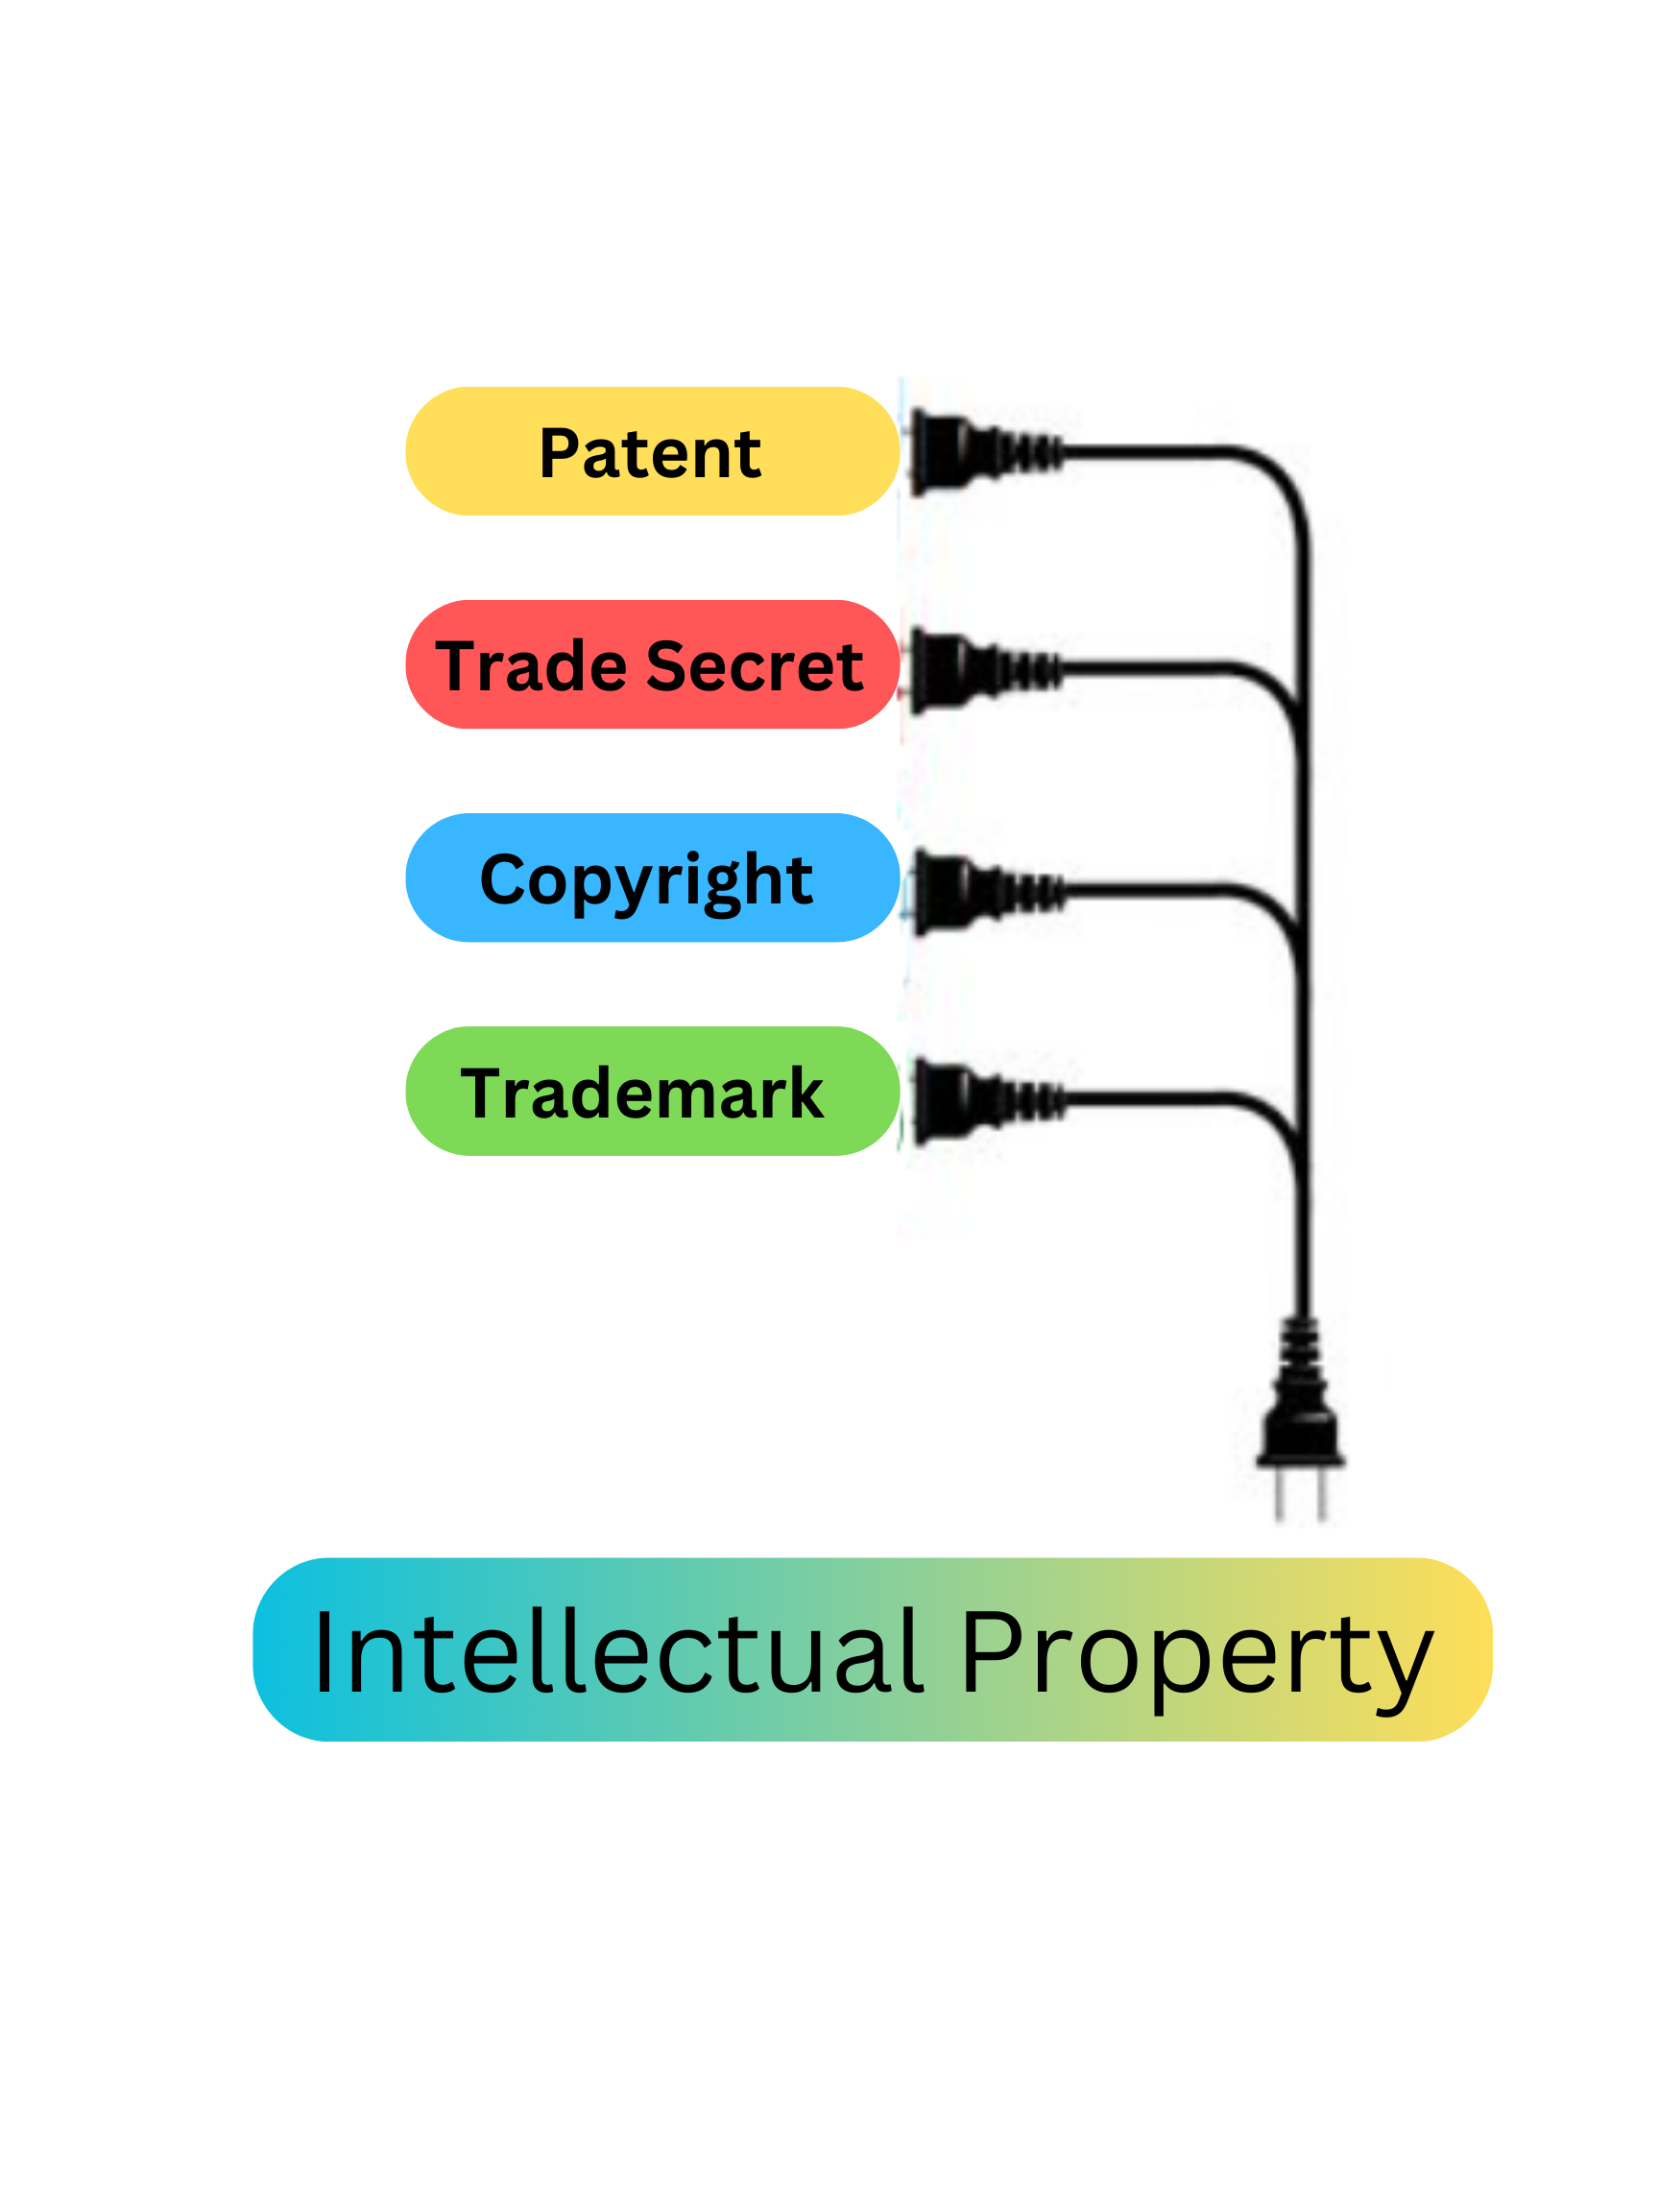 patent, trade secret, copyright, trademark = intellectual property